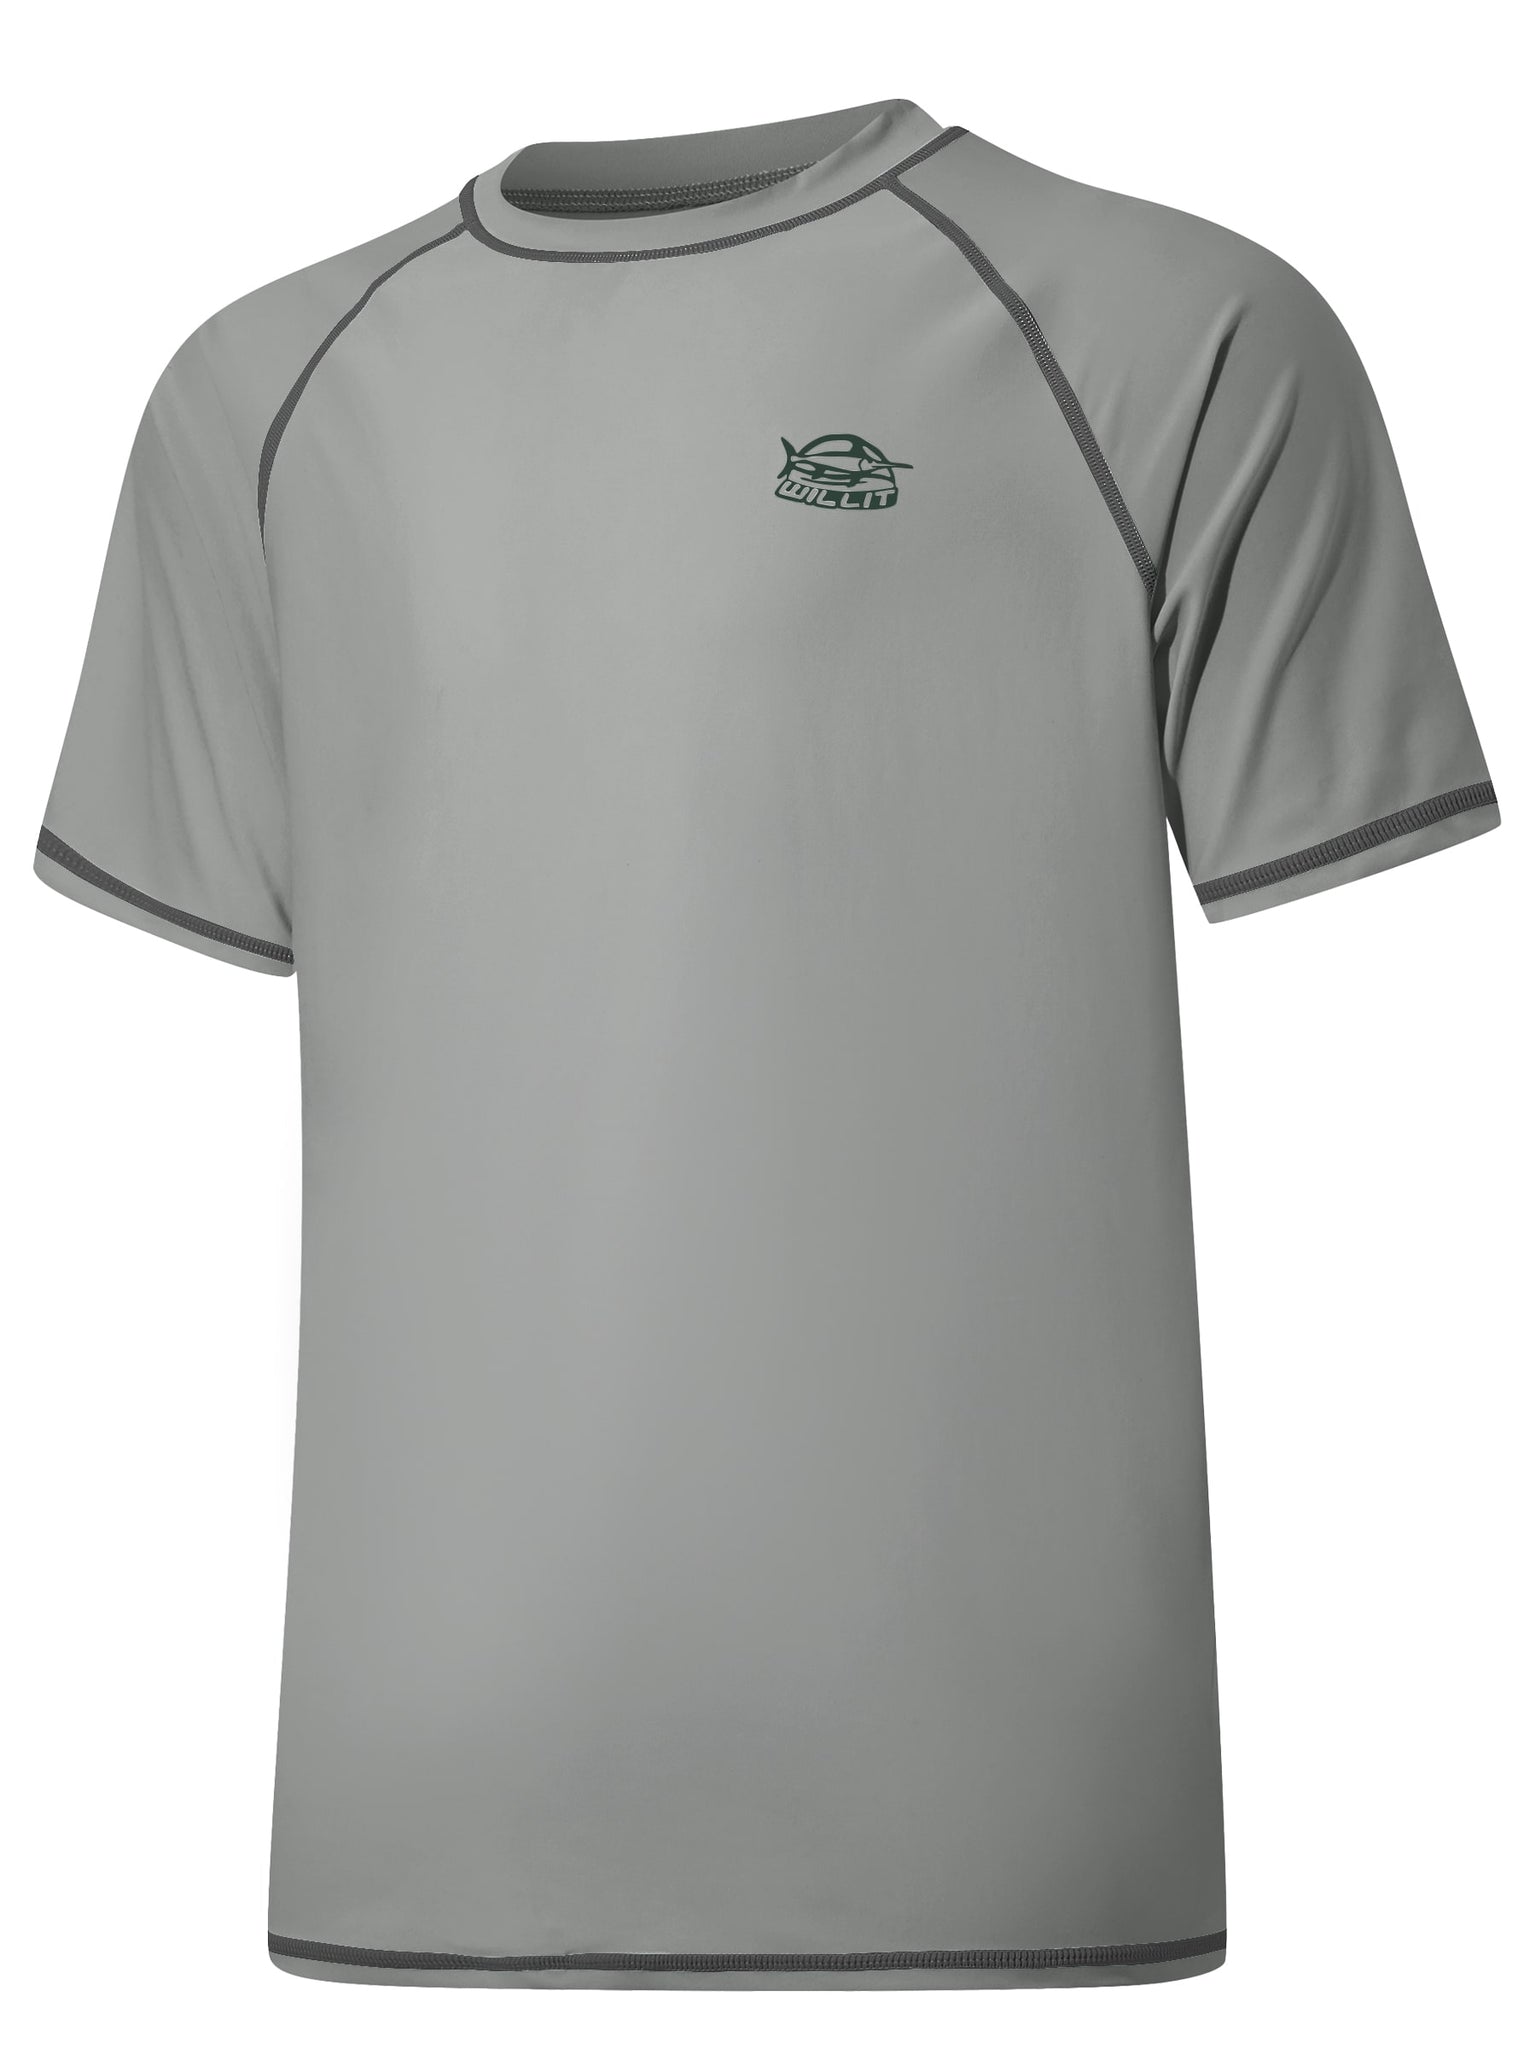 Men's Sun Protection Short Sleeve Shirt_Gray_detail1